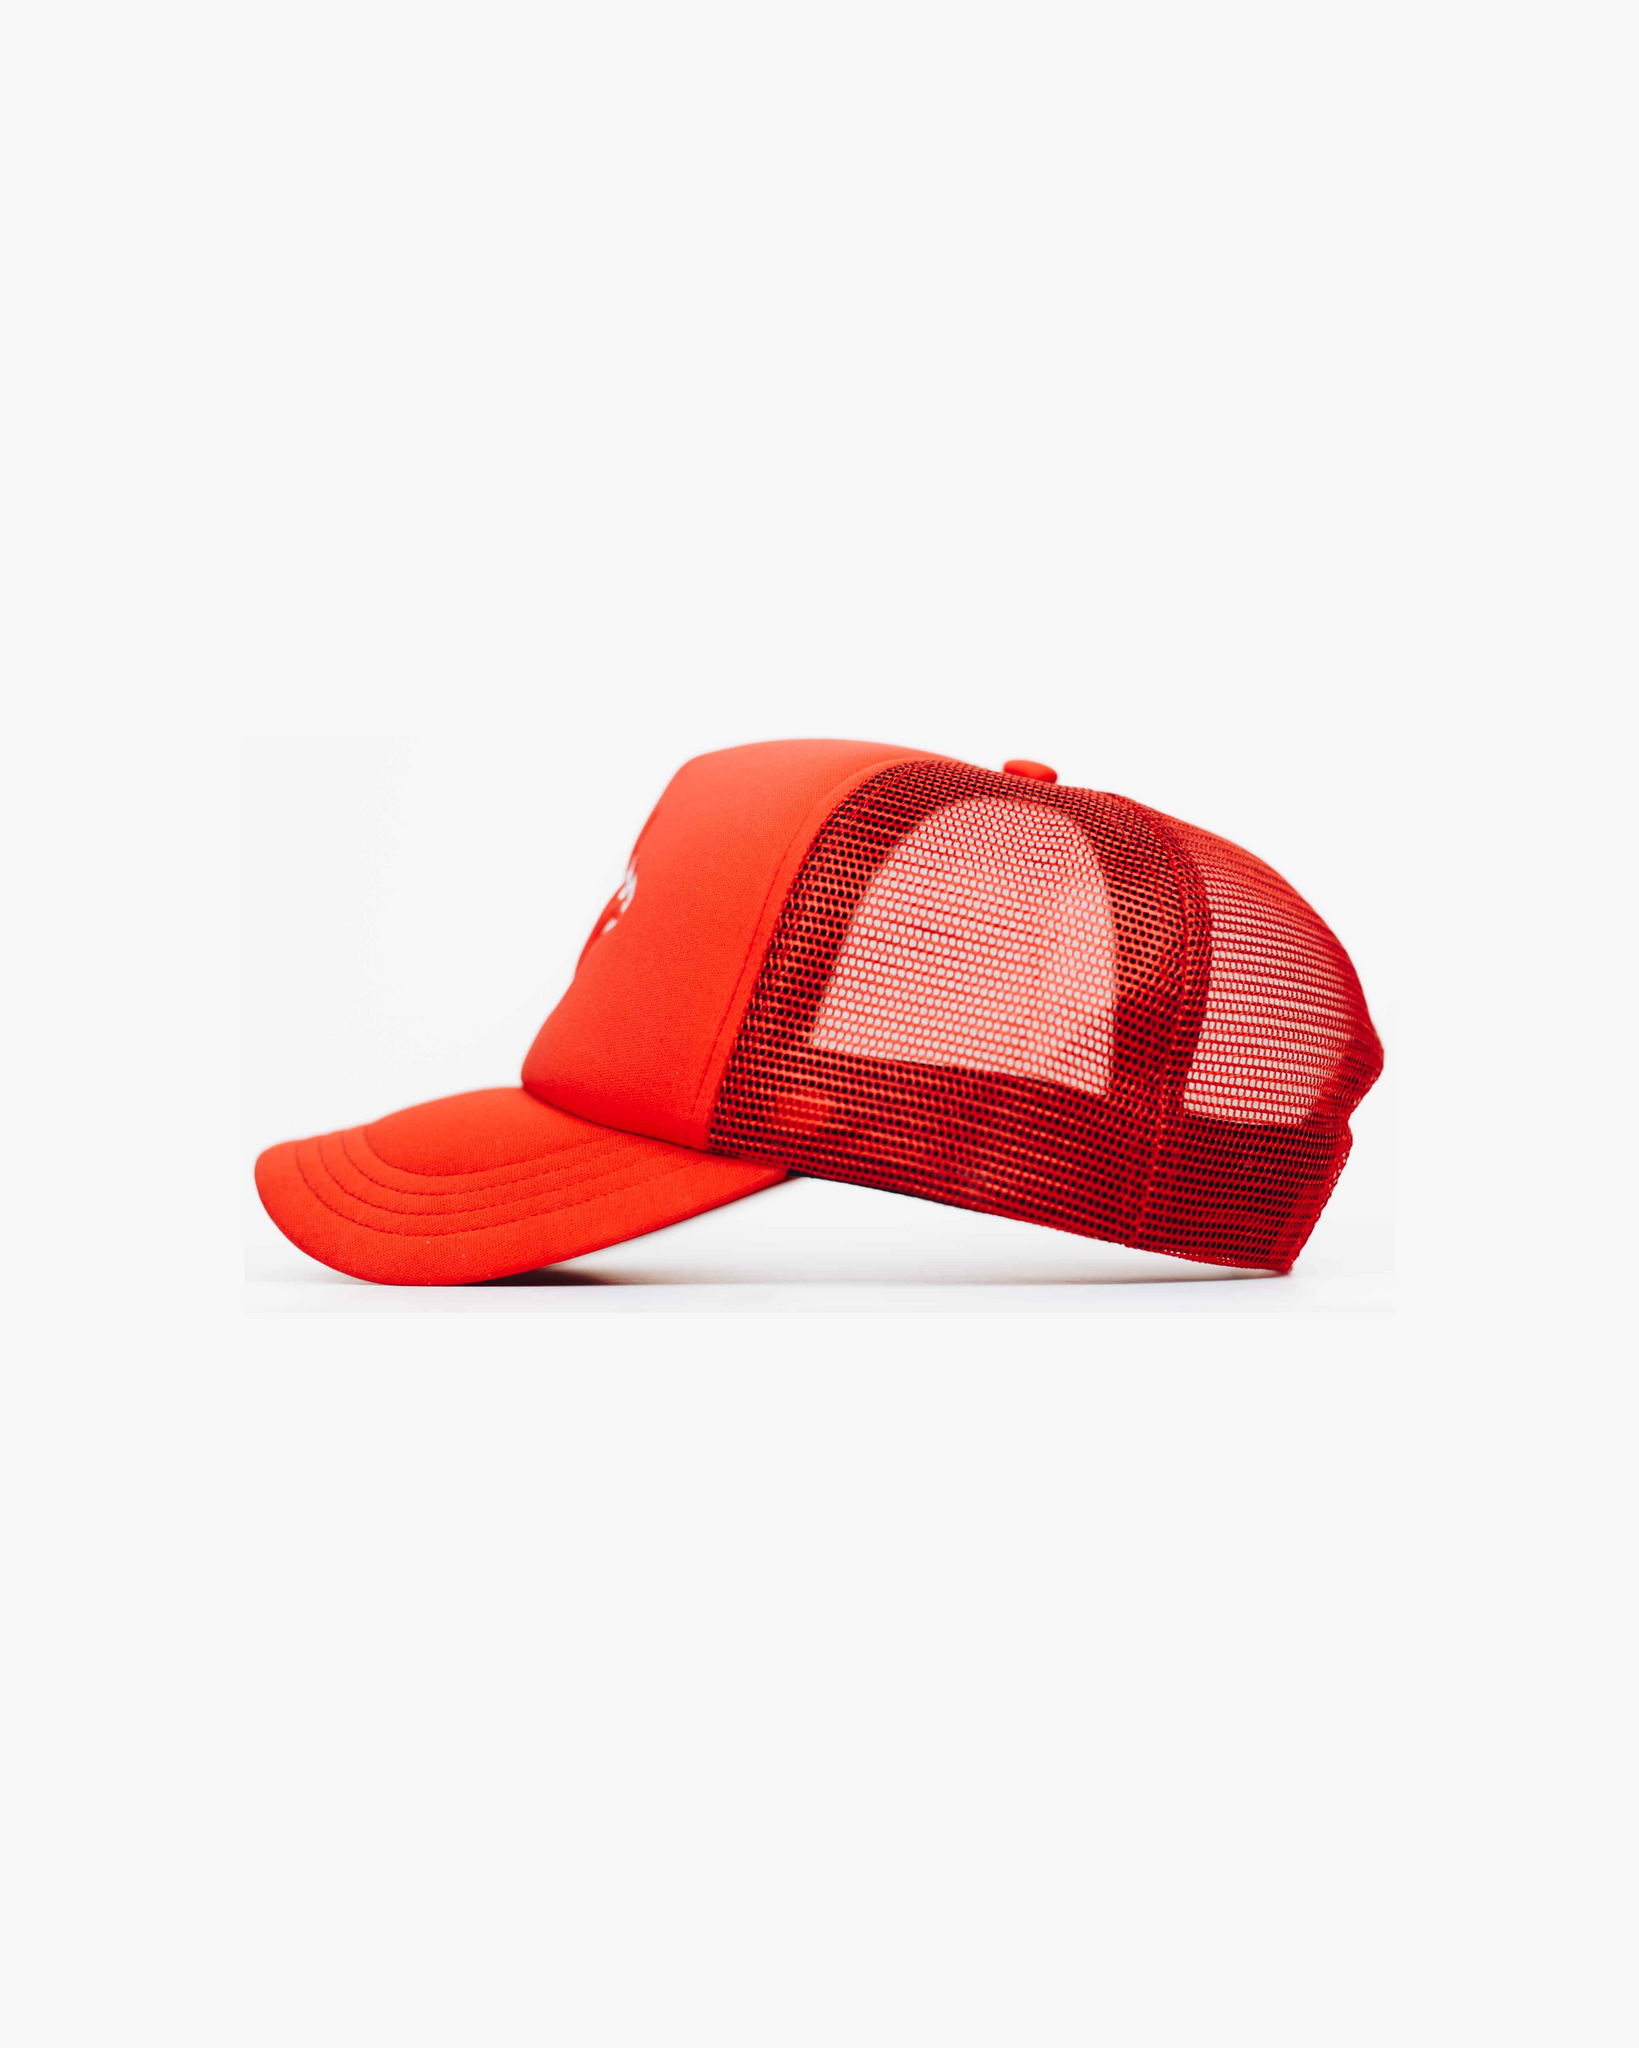 Untamed Red Fire Trucker Hat